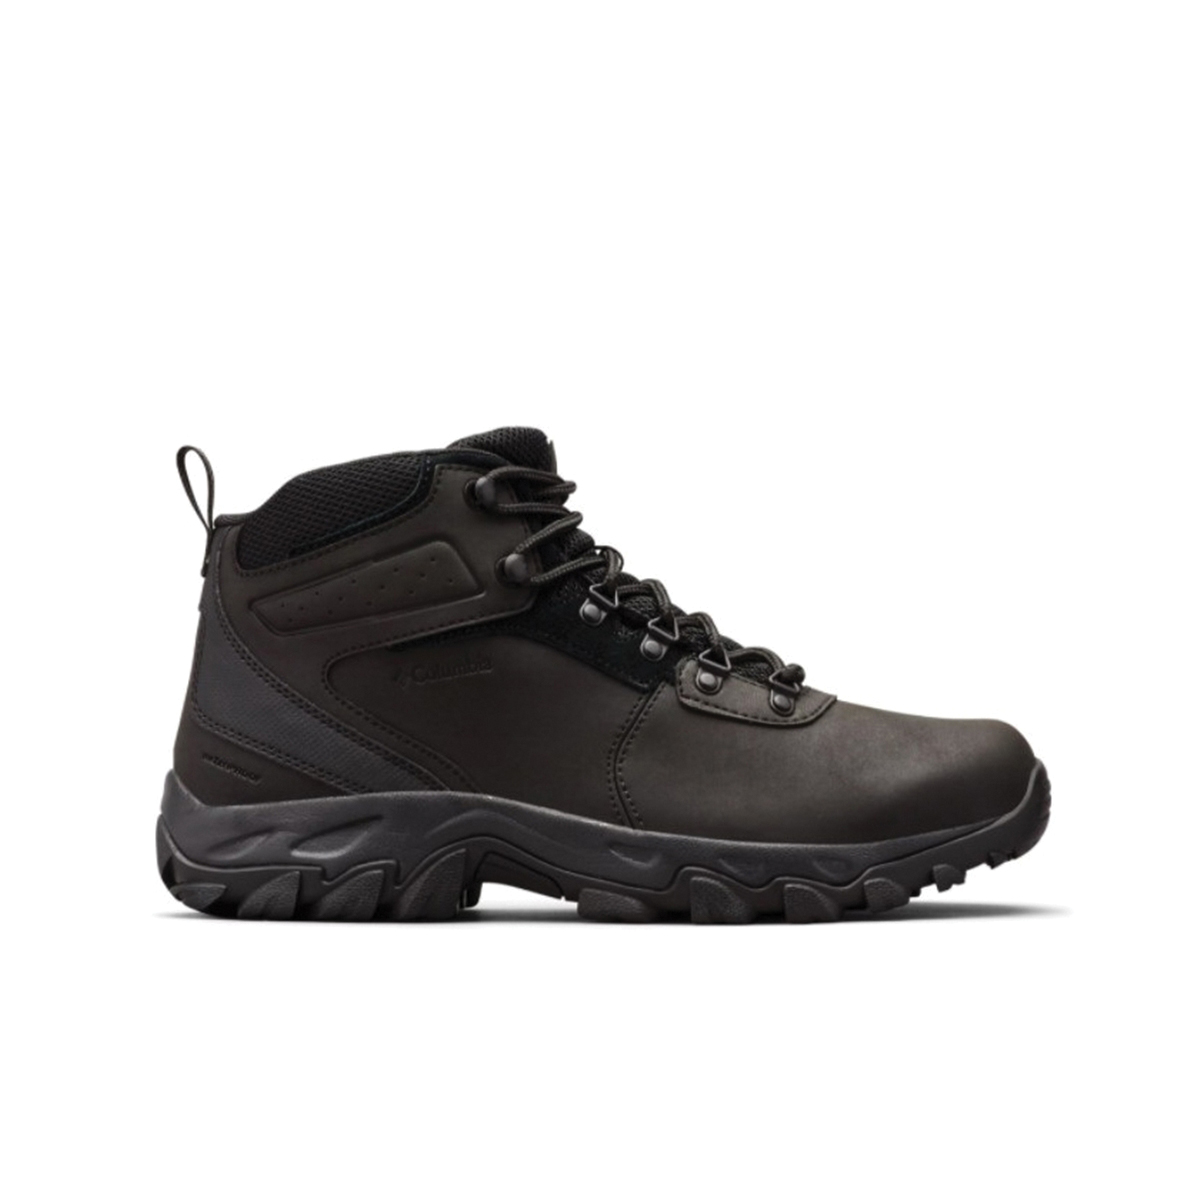 Columbia Newton Ridge Plus II Series 1594731-011-9.5 Hiking Boots, 9.5, Black, Leather/Suede Upper - 1